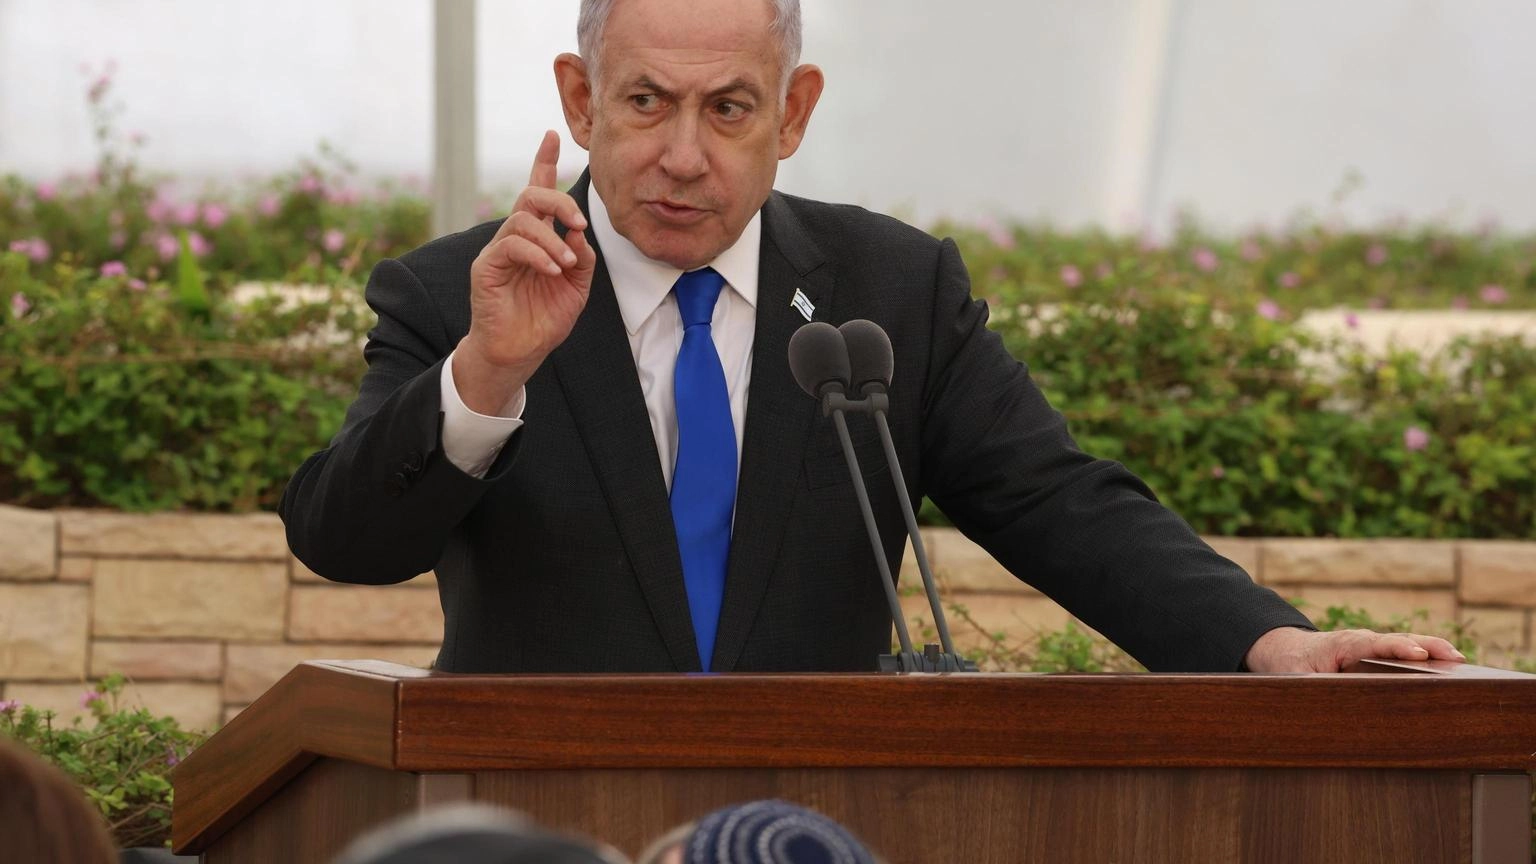 Netanyahu, Iran punta al Medio Oriente, minaccia per tutti